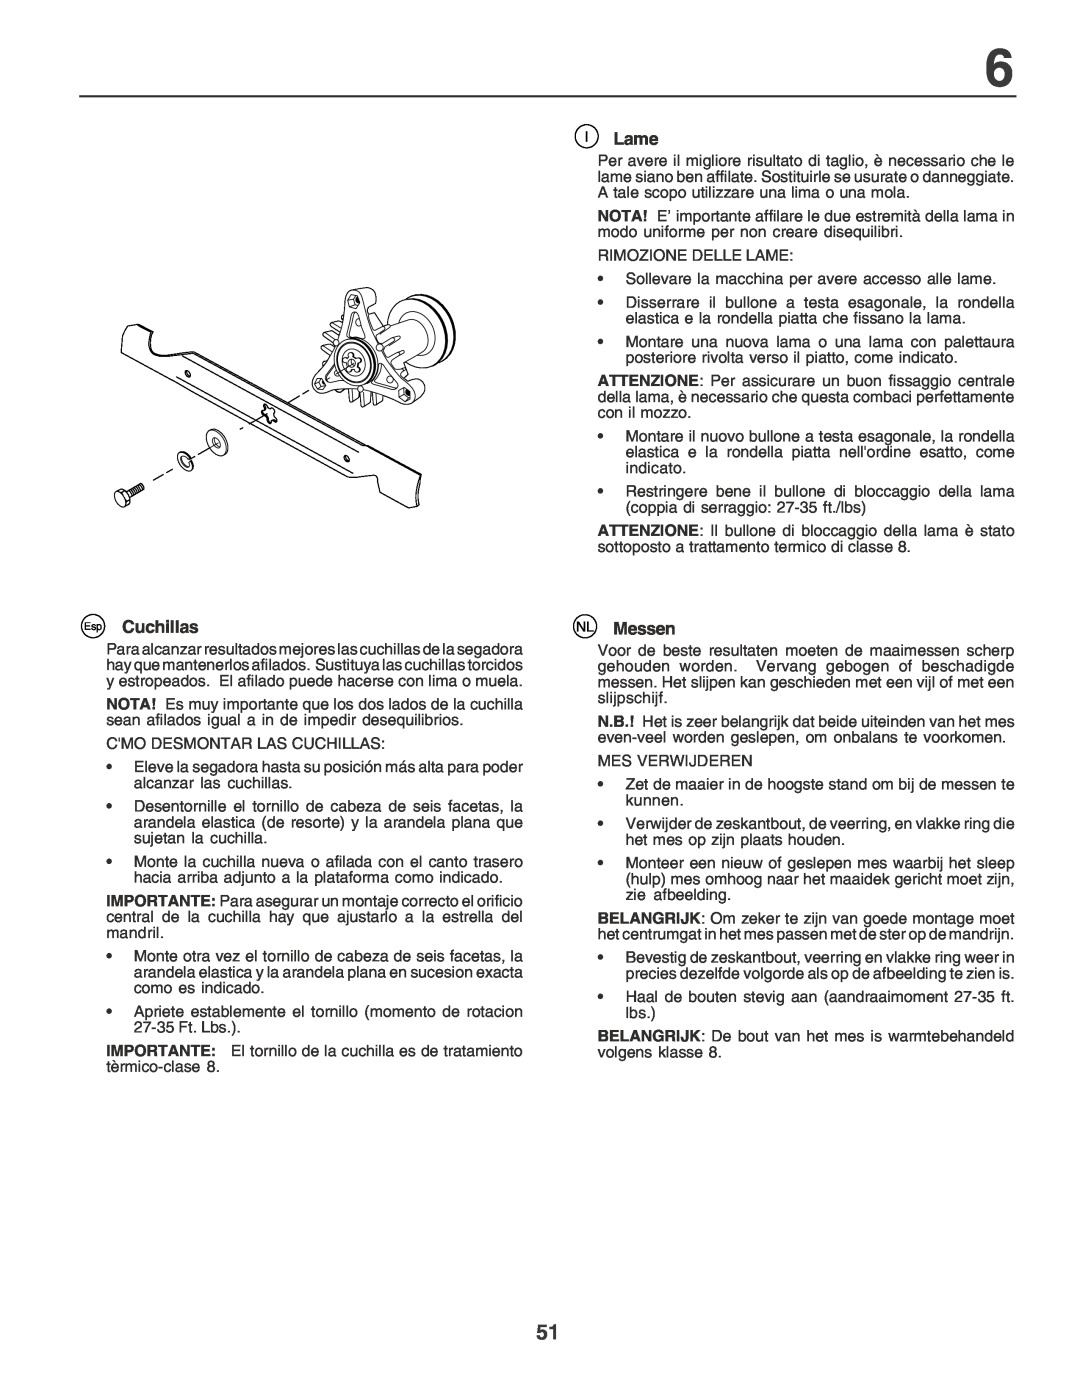 Husqvarna YT155 instruction manual Esp Cuchillas, Lame, NL Messen 